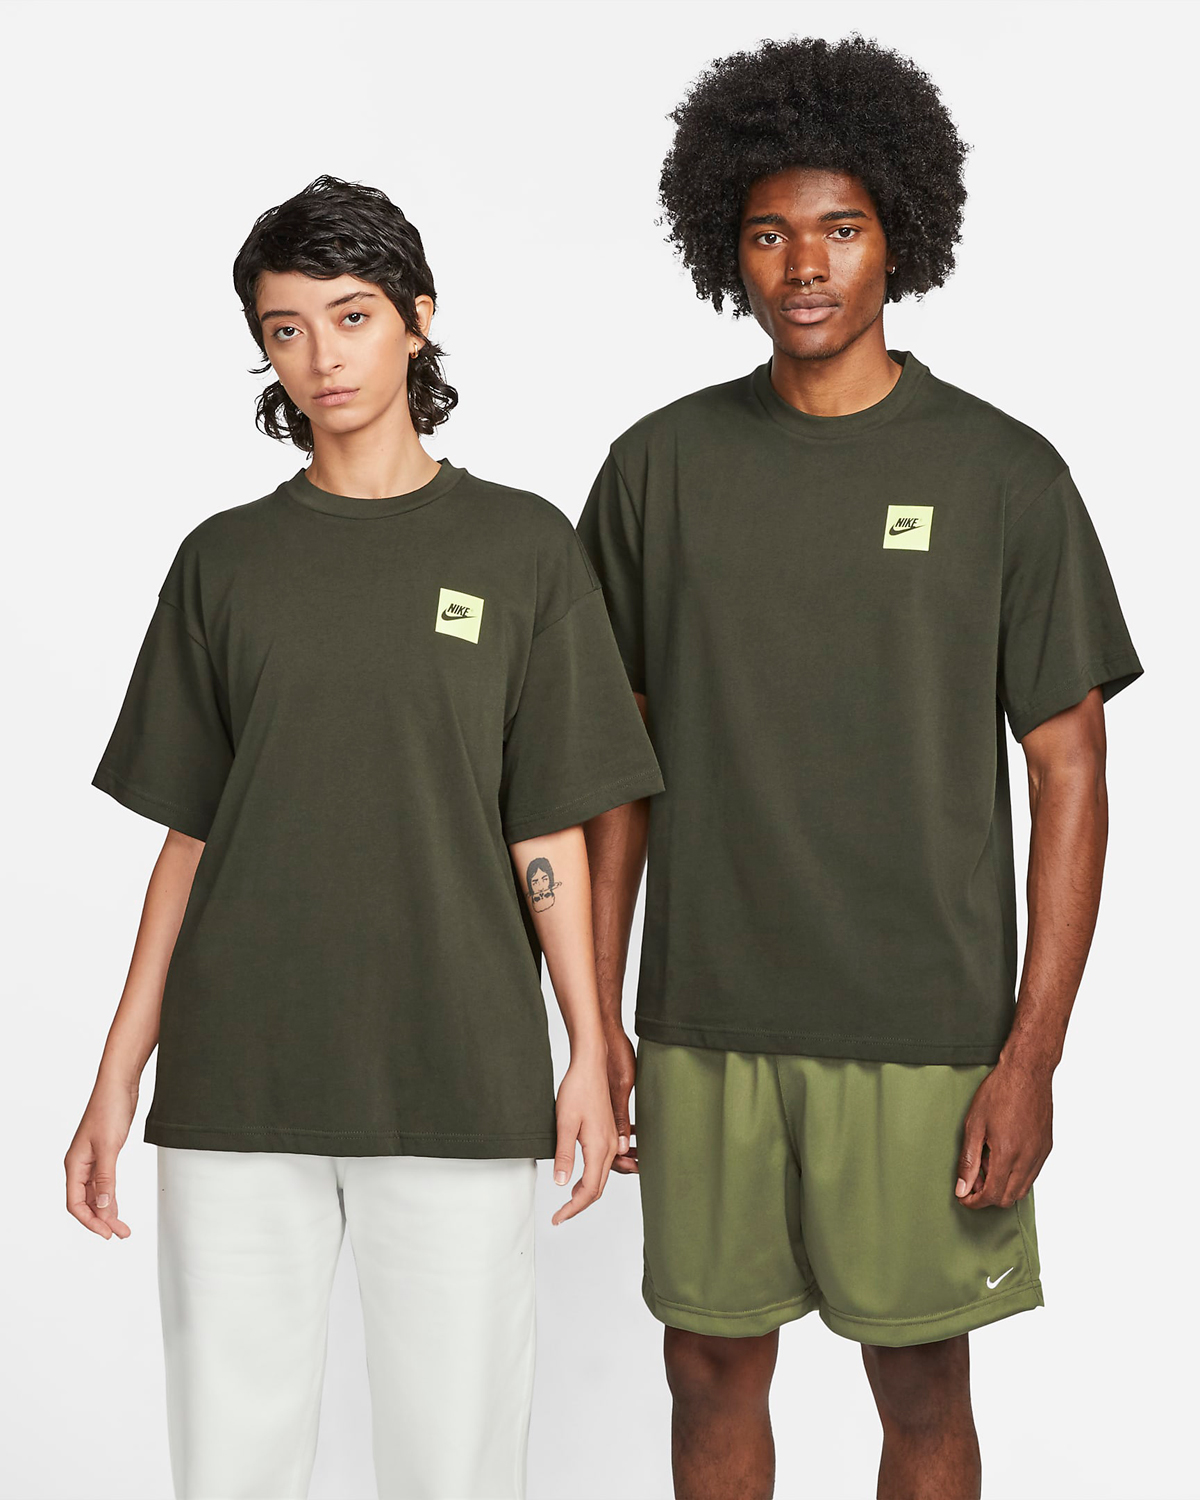 Nike-T-Shirt-Sequoia-1